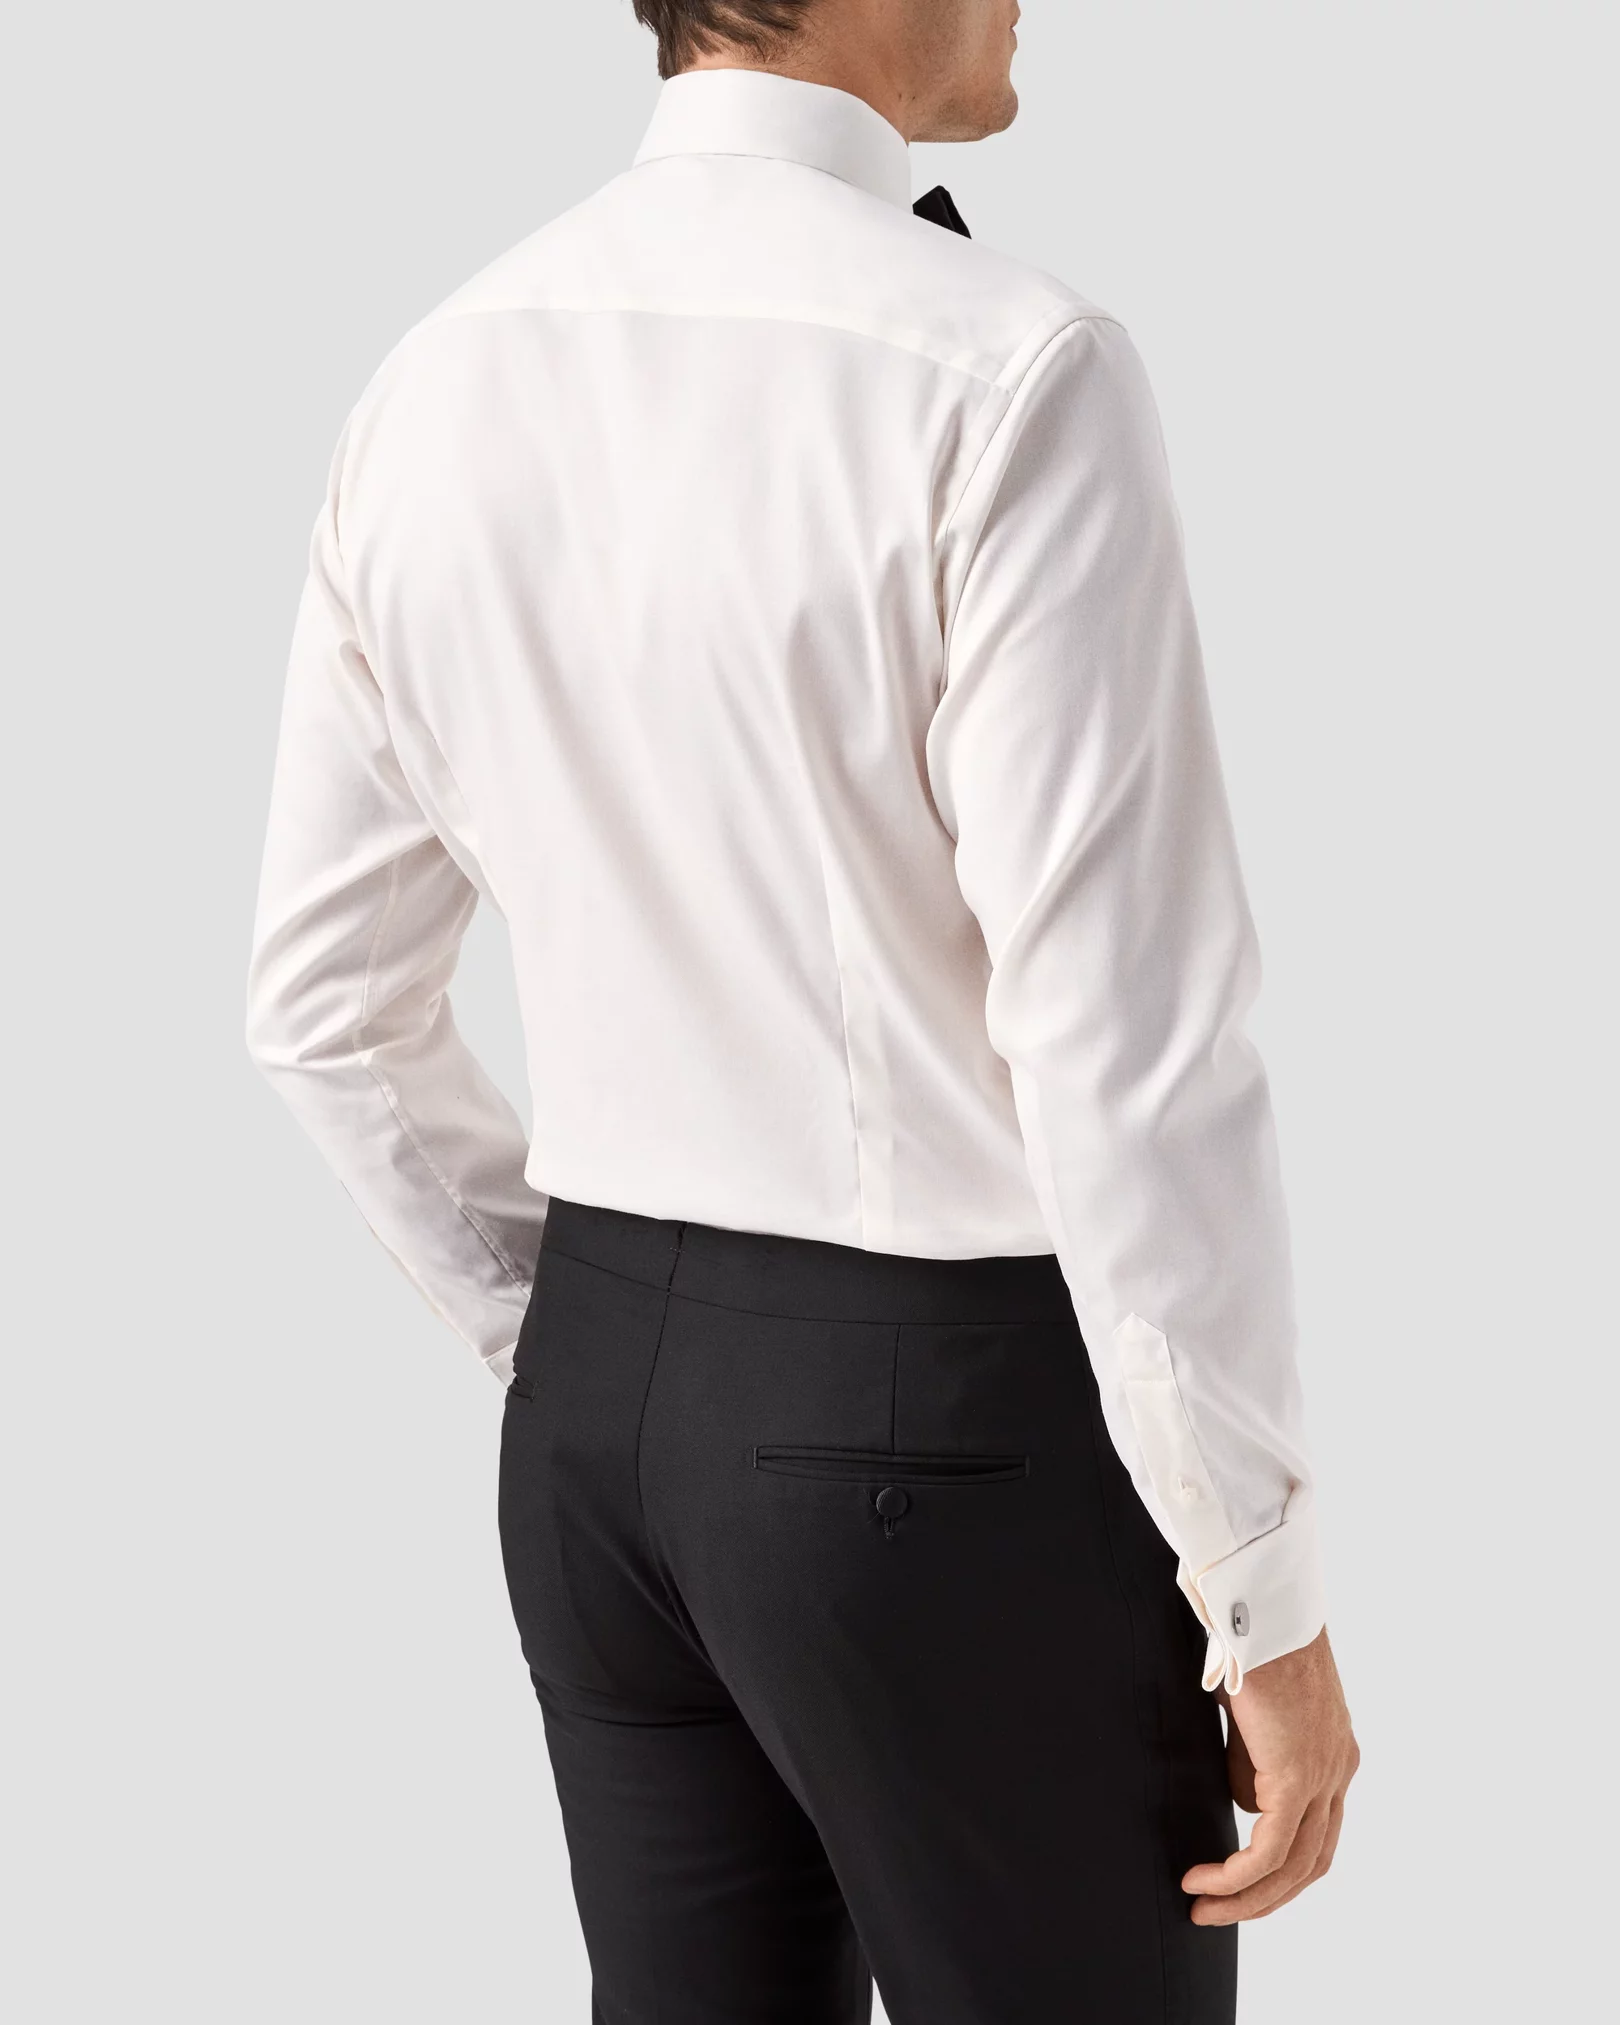 Eton - off white twill evening shirt